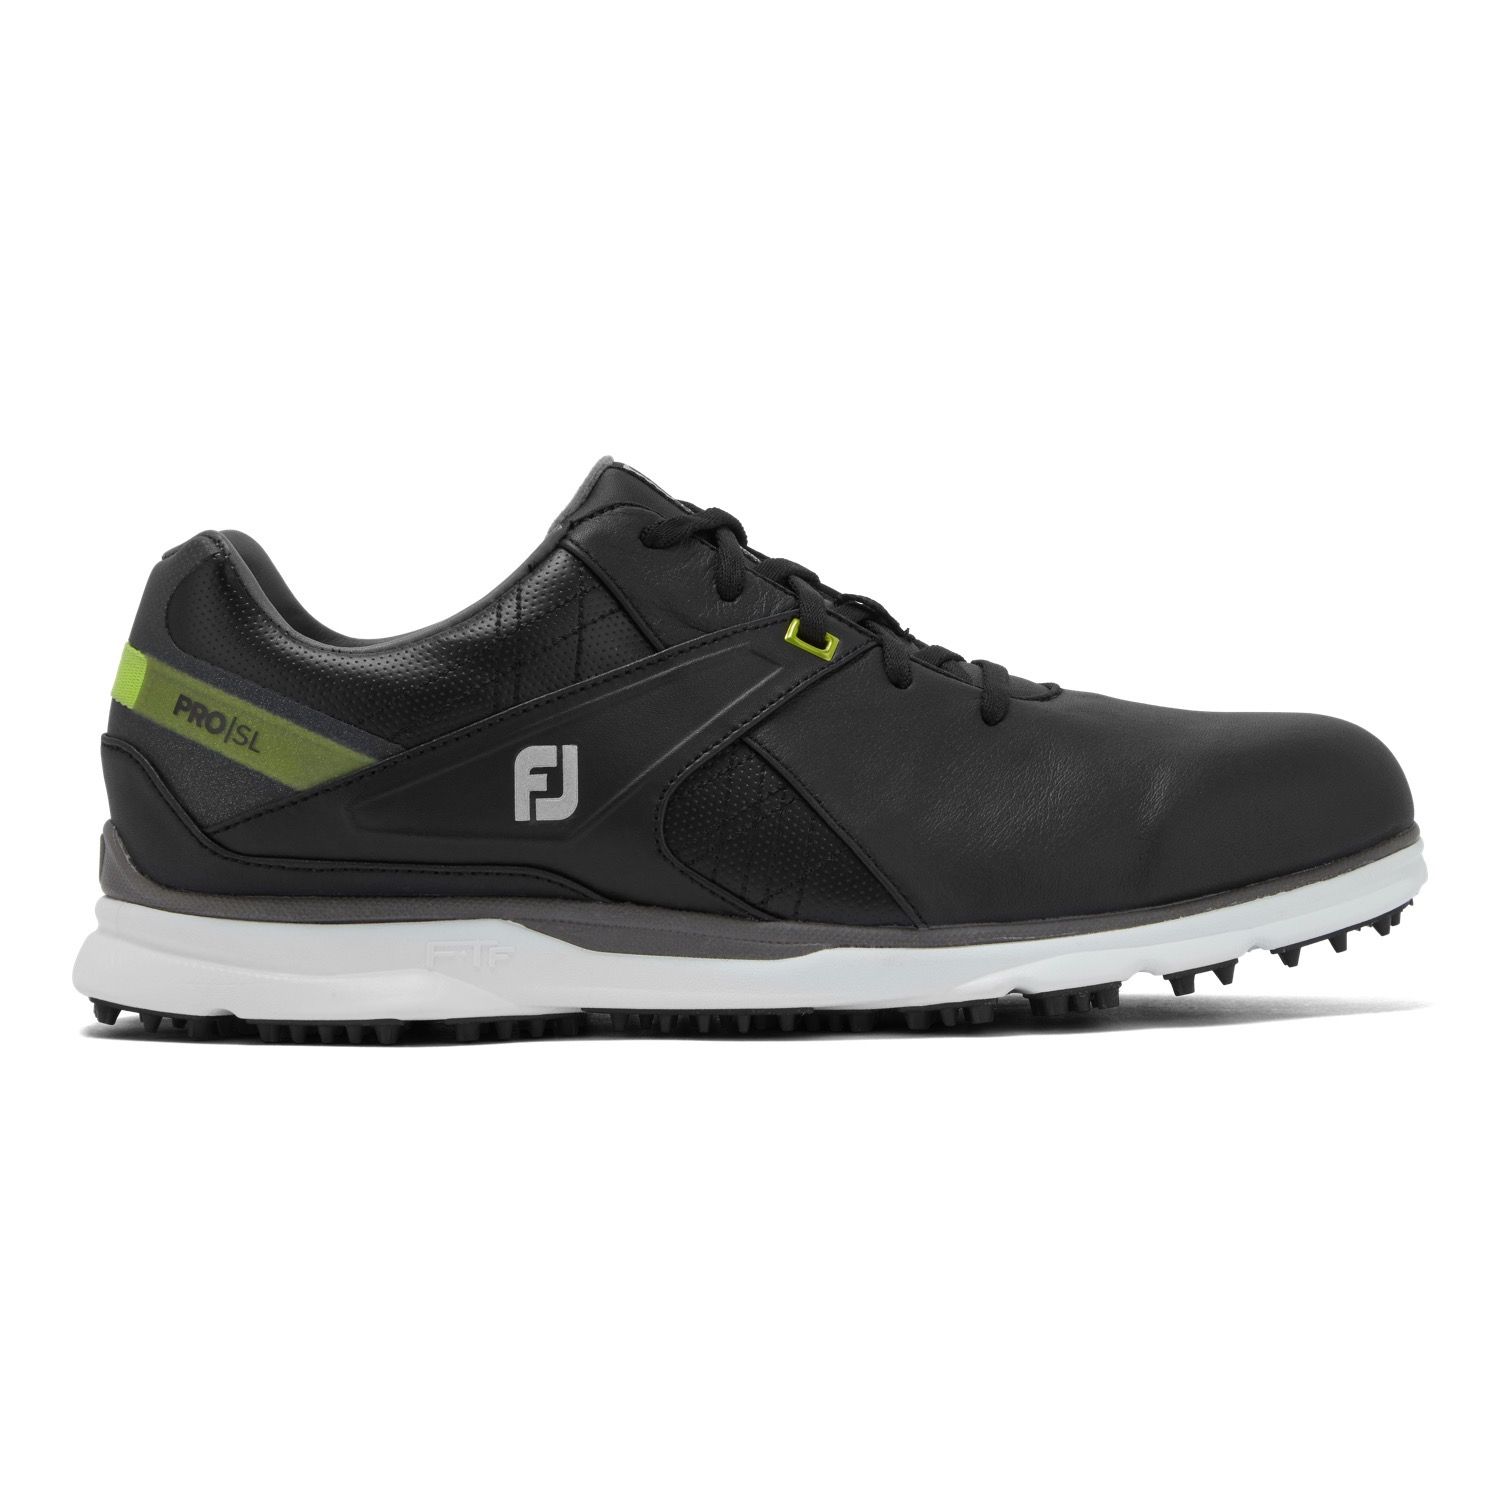 FootJoy Pro SL Carbon golf shoes review - Best Golf Shoes - National ...